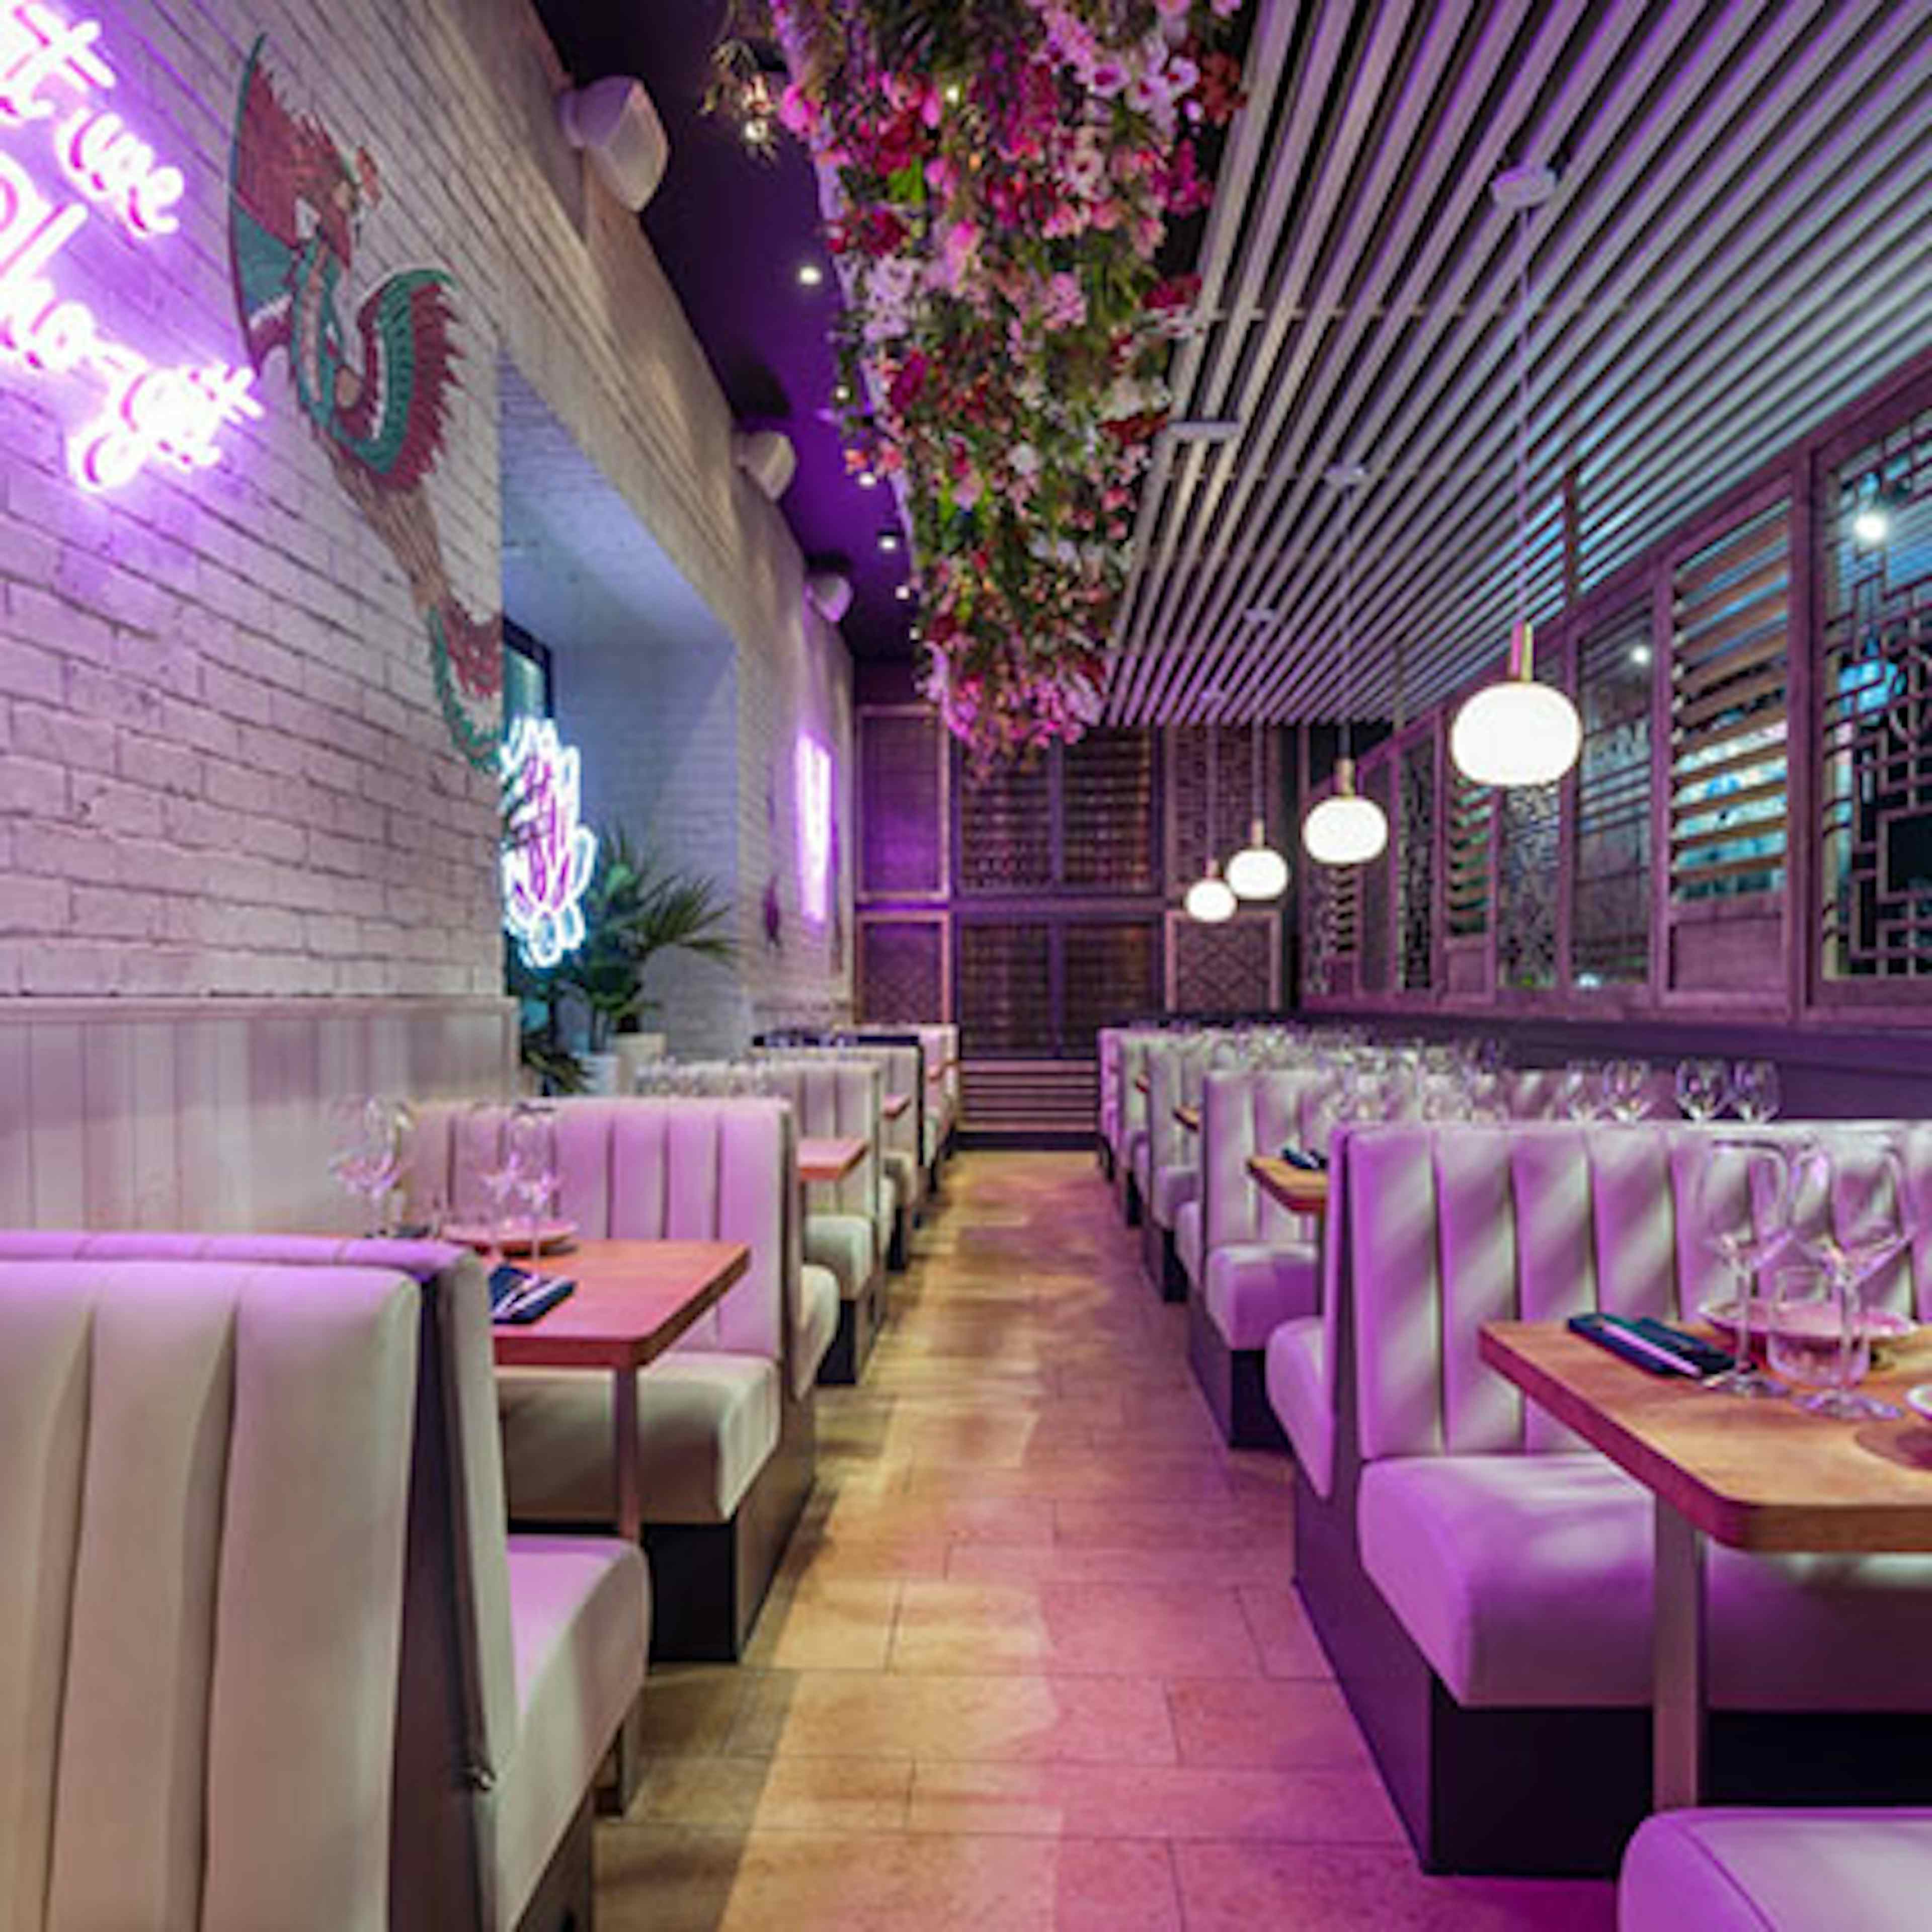 Namii Kitchen & Cocktails - Full Restaurant, bar and mezzanine image 2